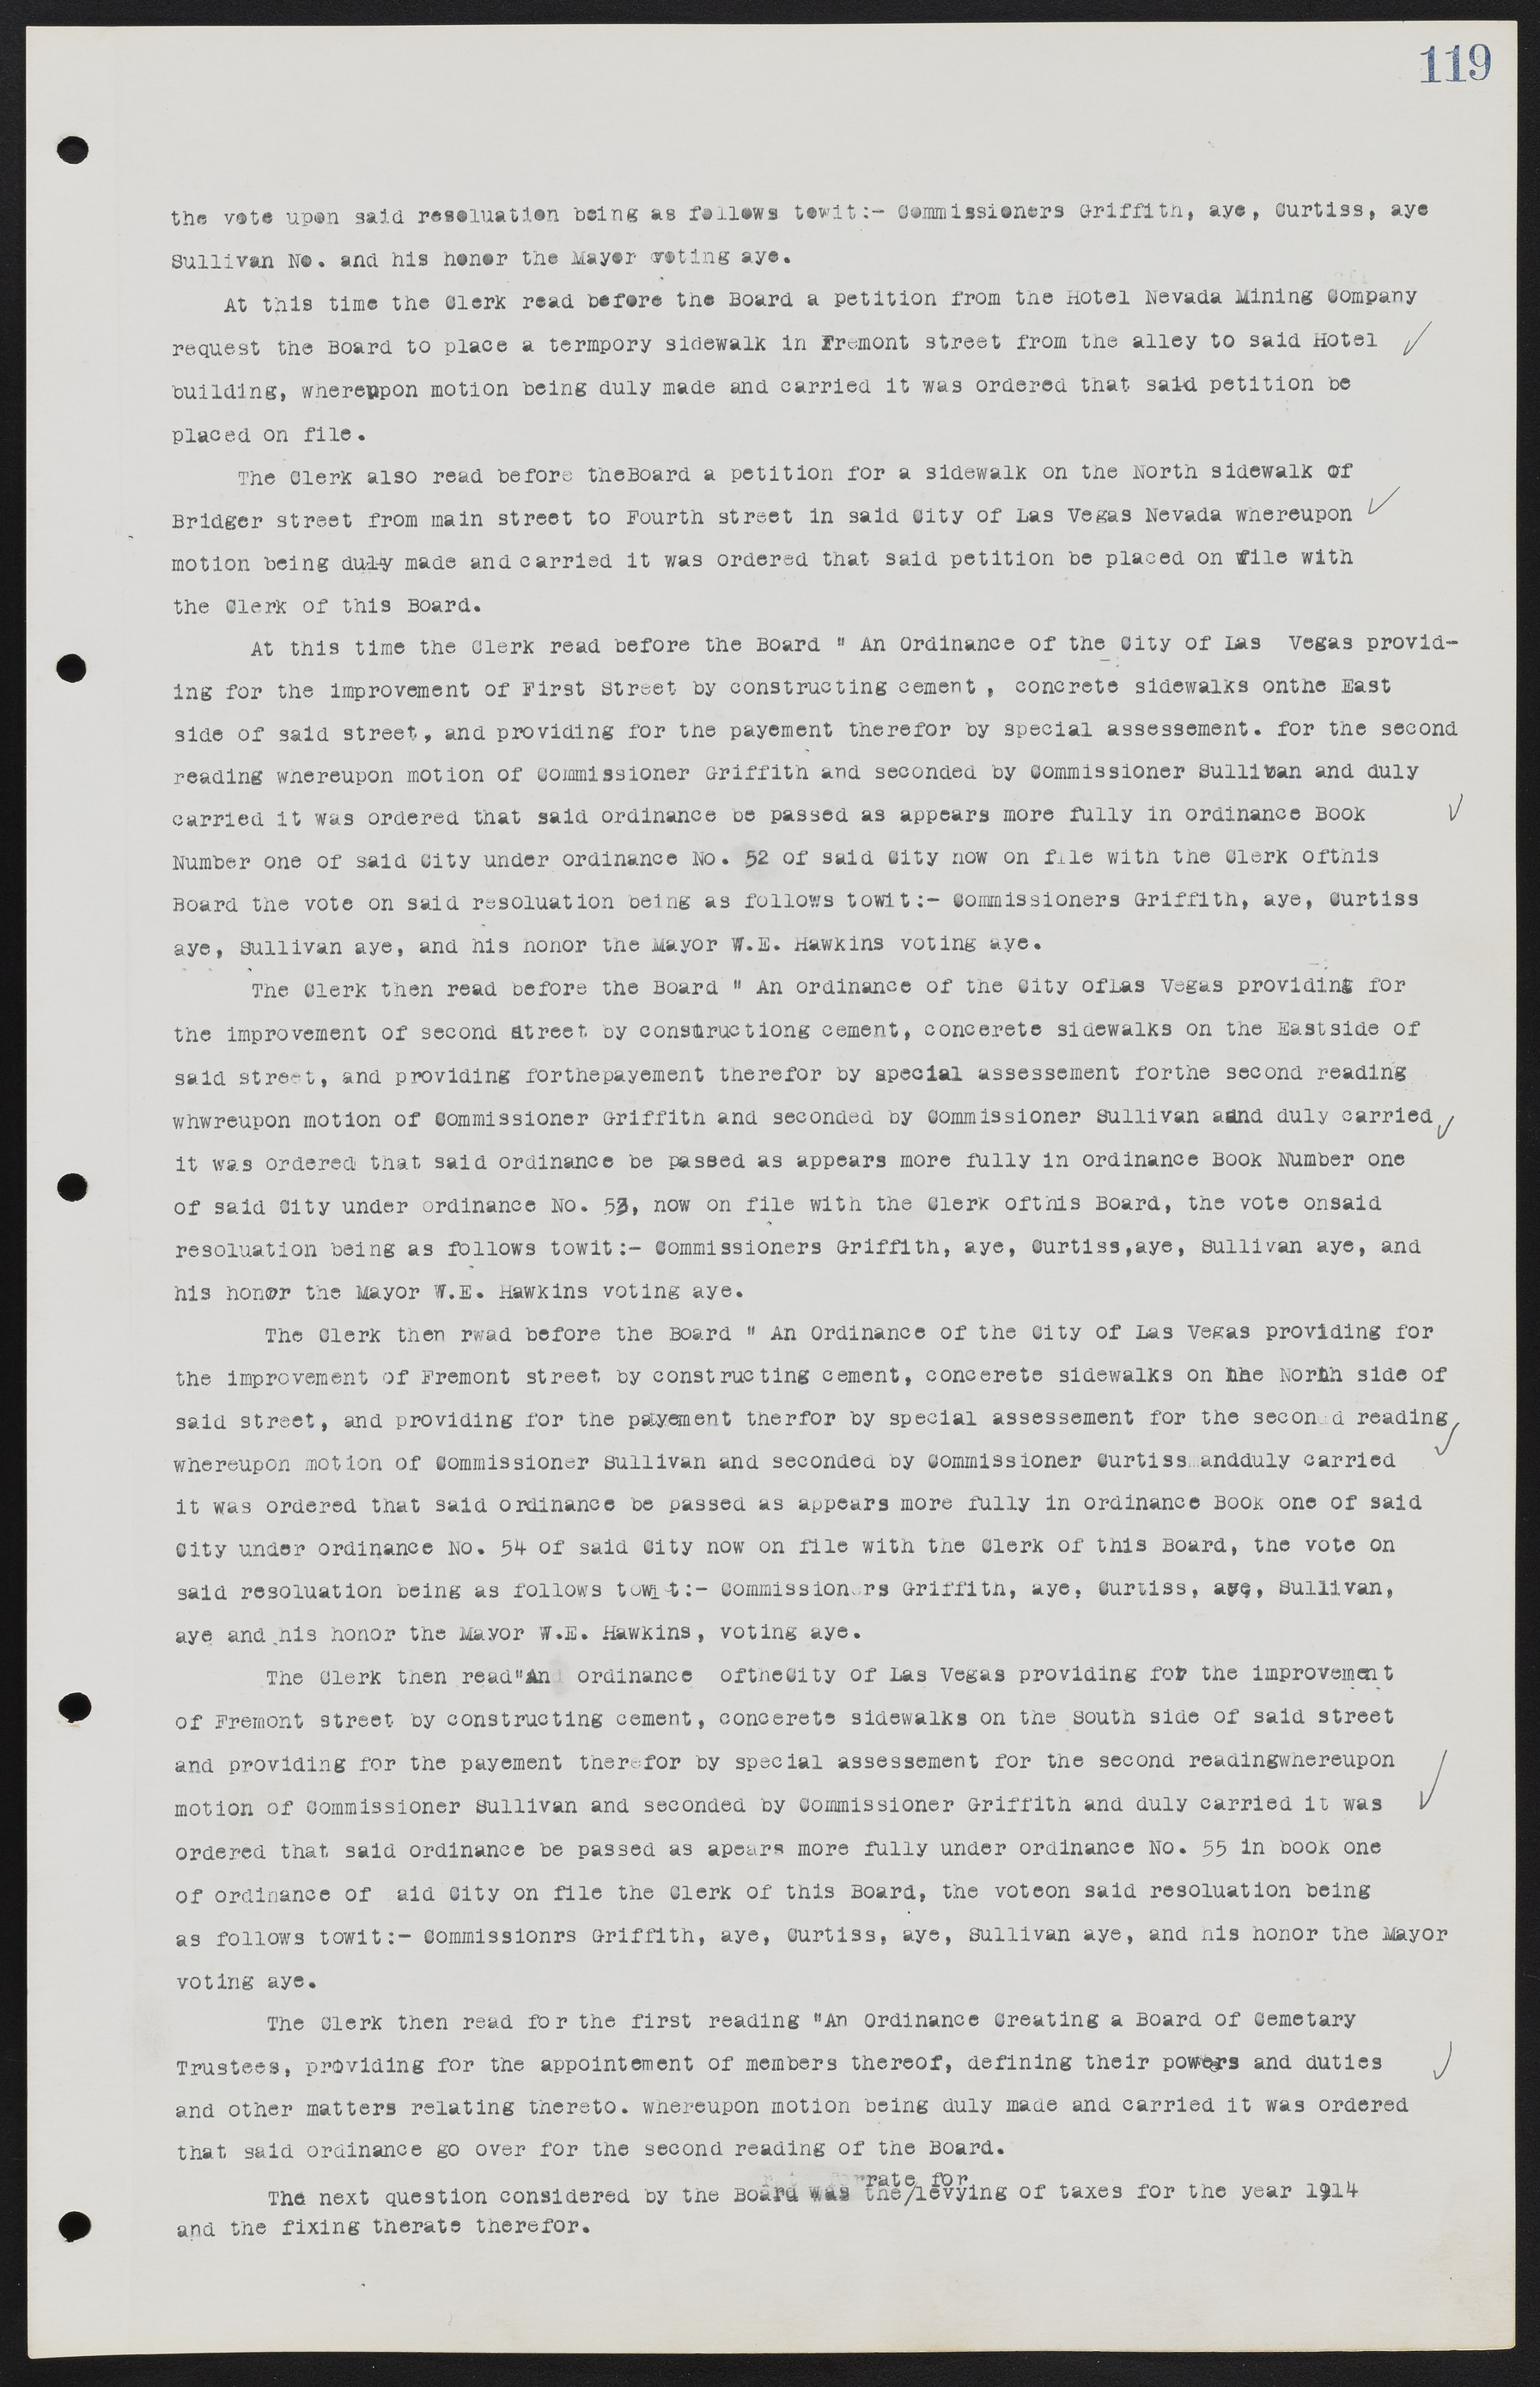 Las Vegas City Commission Minutes, June 22, 1911 to February 7, 1922, lvc000001-133